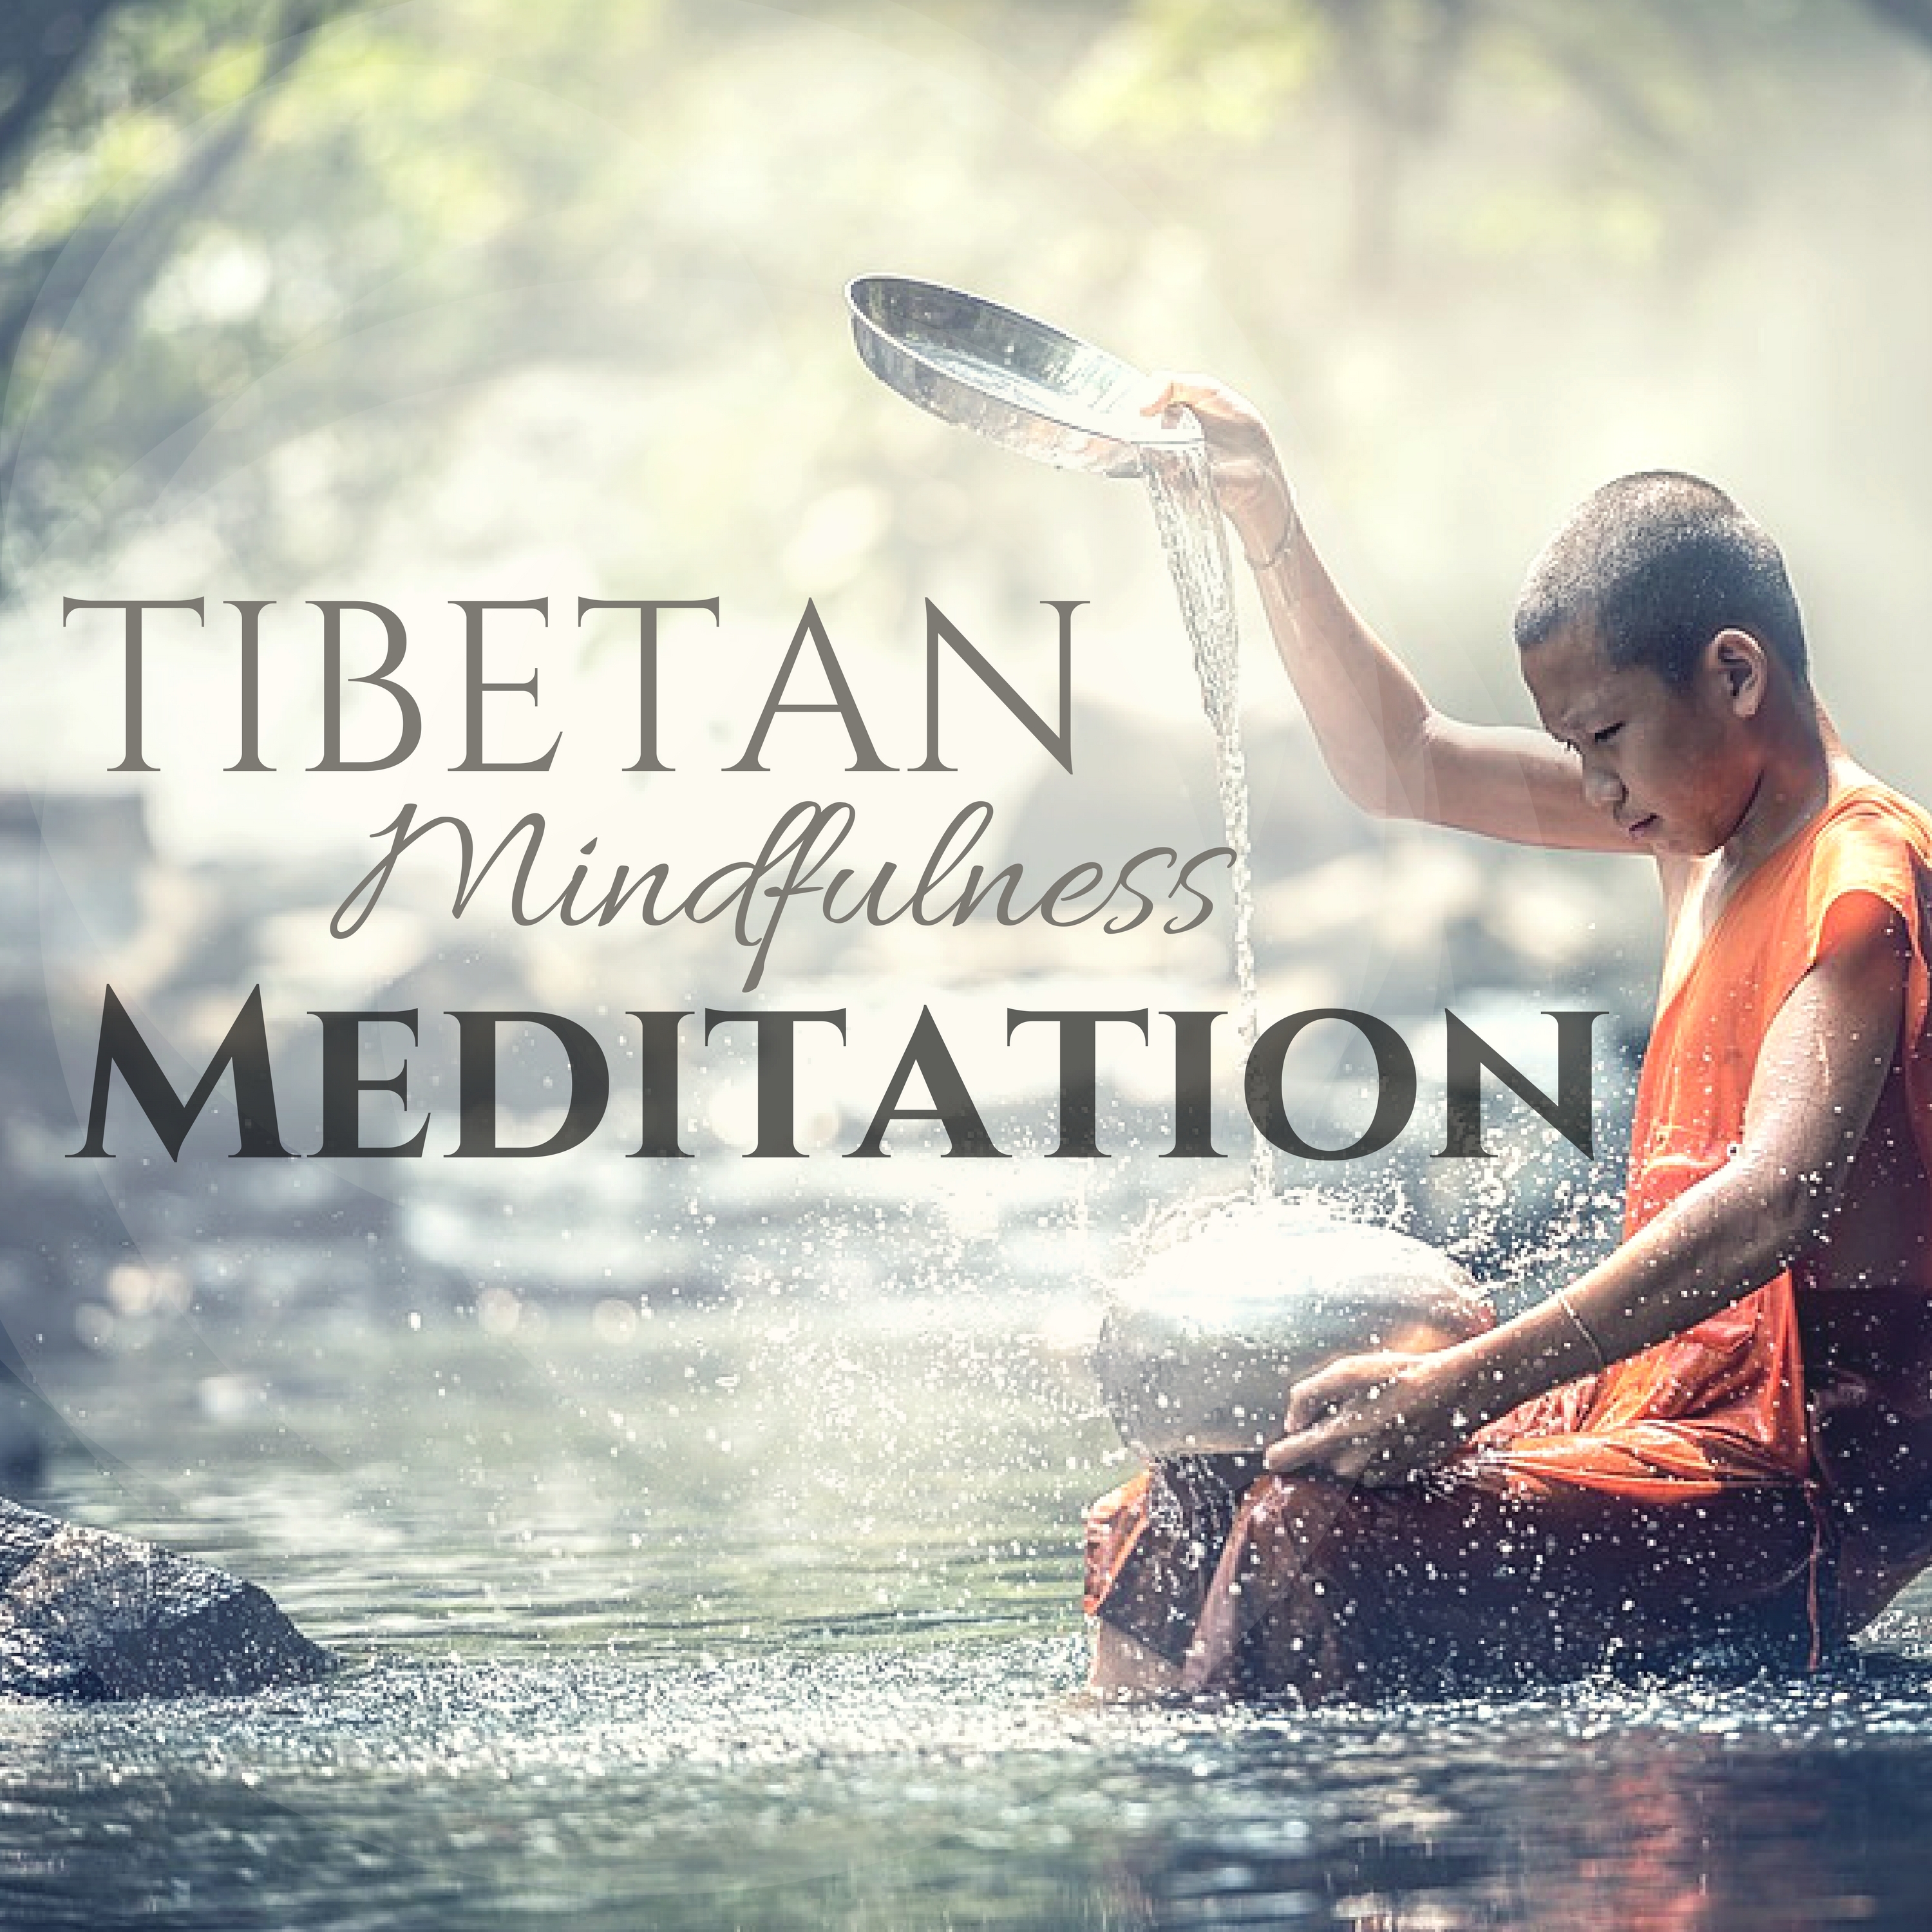 Asian Zen Meditation